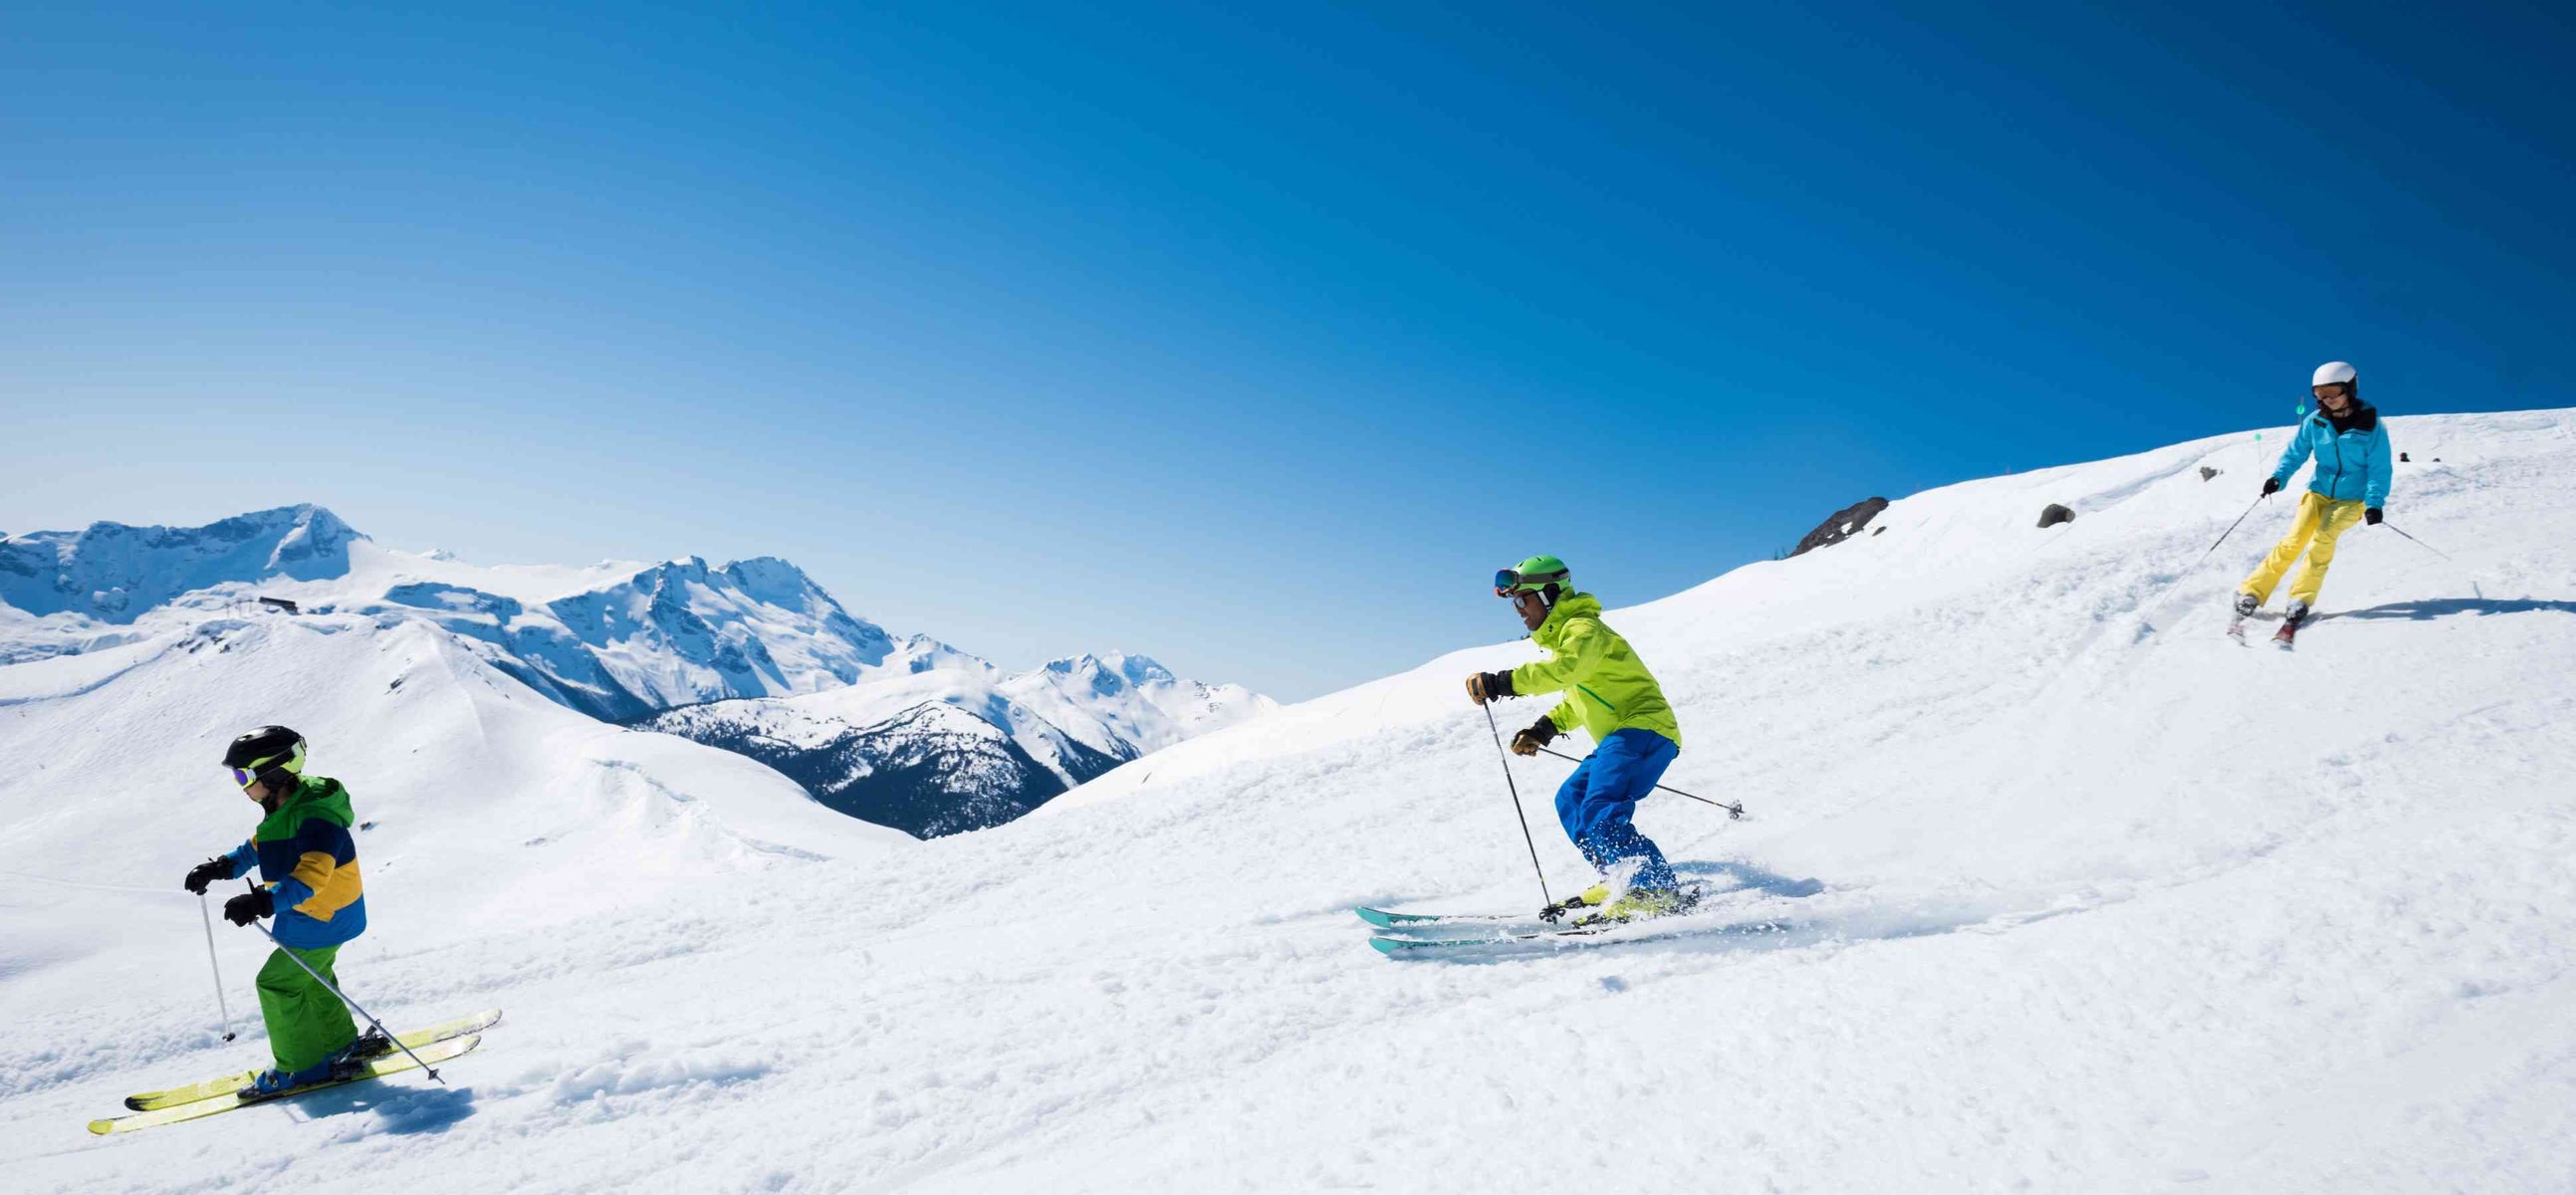 UTAH SKI GEAR - Everything You Need To Ski Affordably – Utah Ski Gear